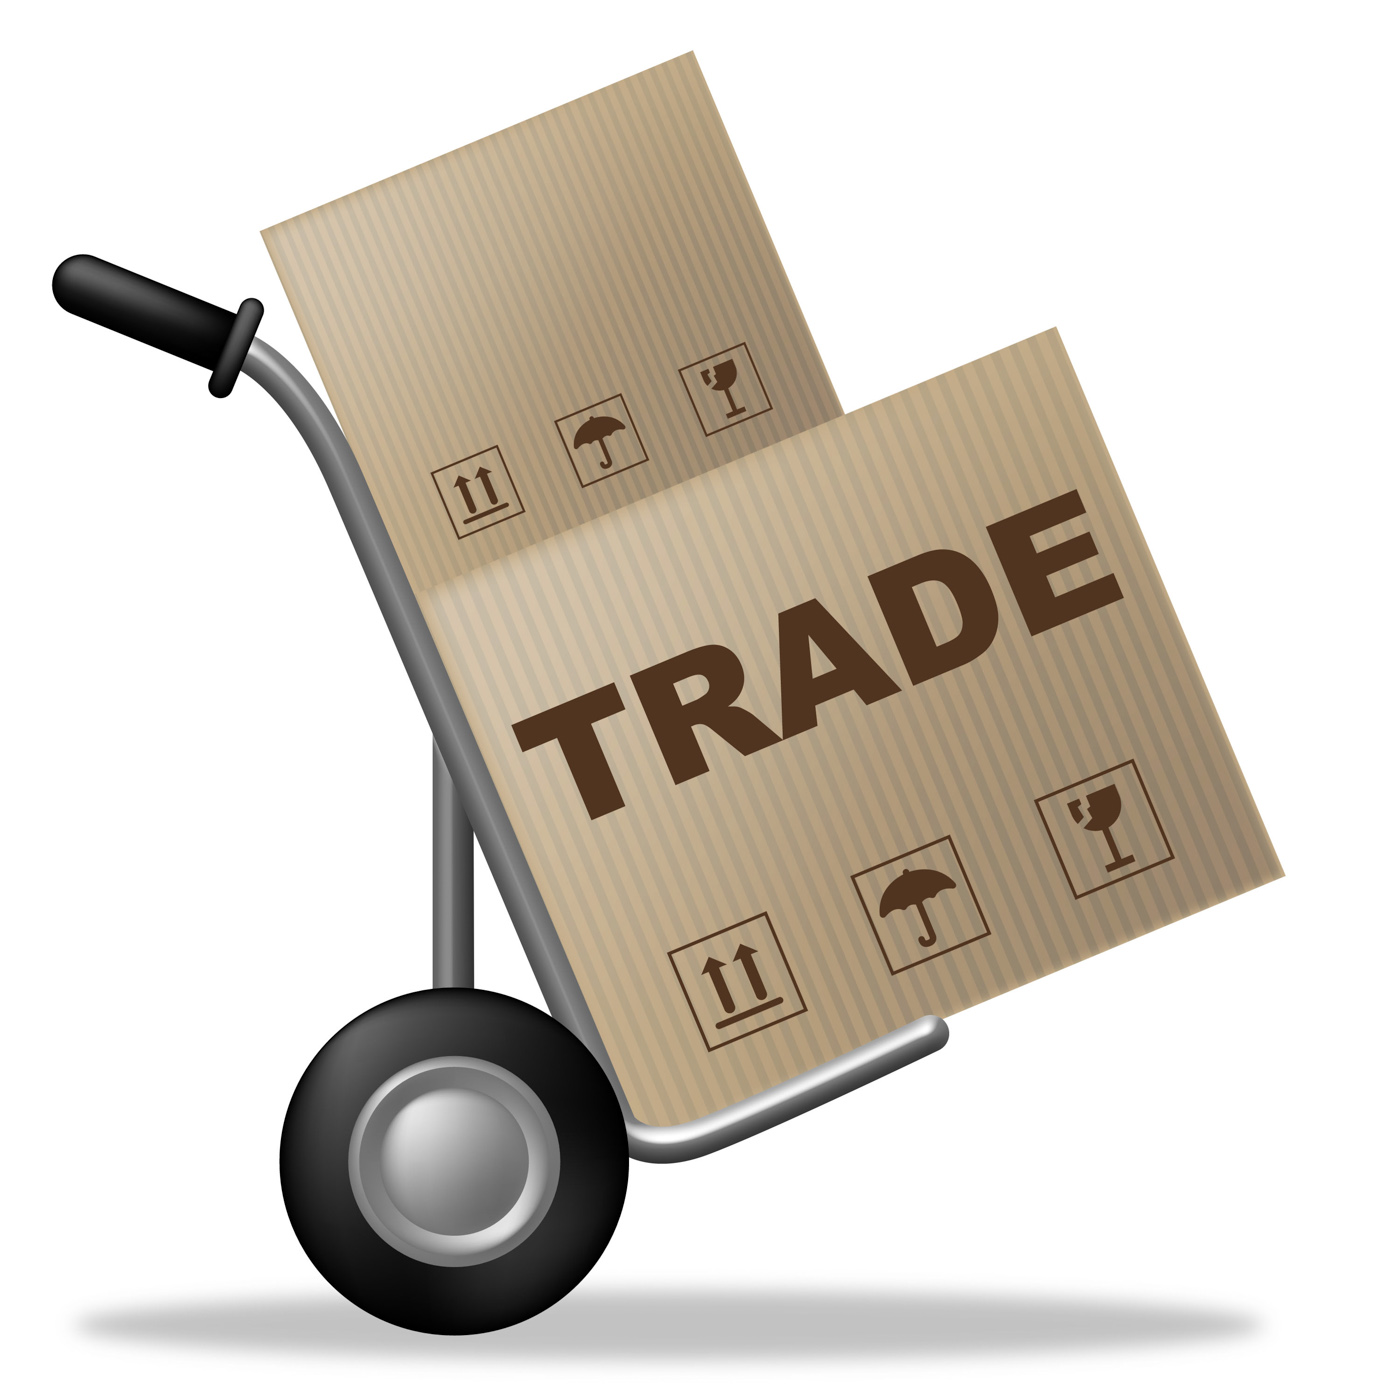 Trade package indicates shipping box and biz photo